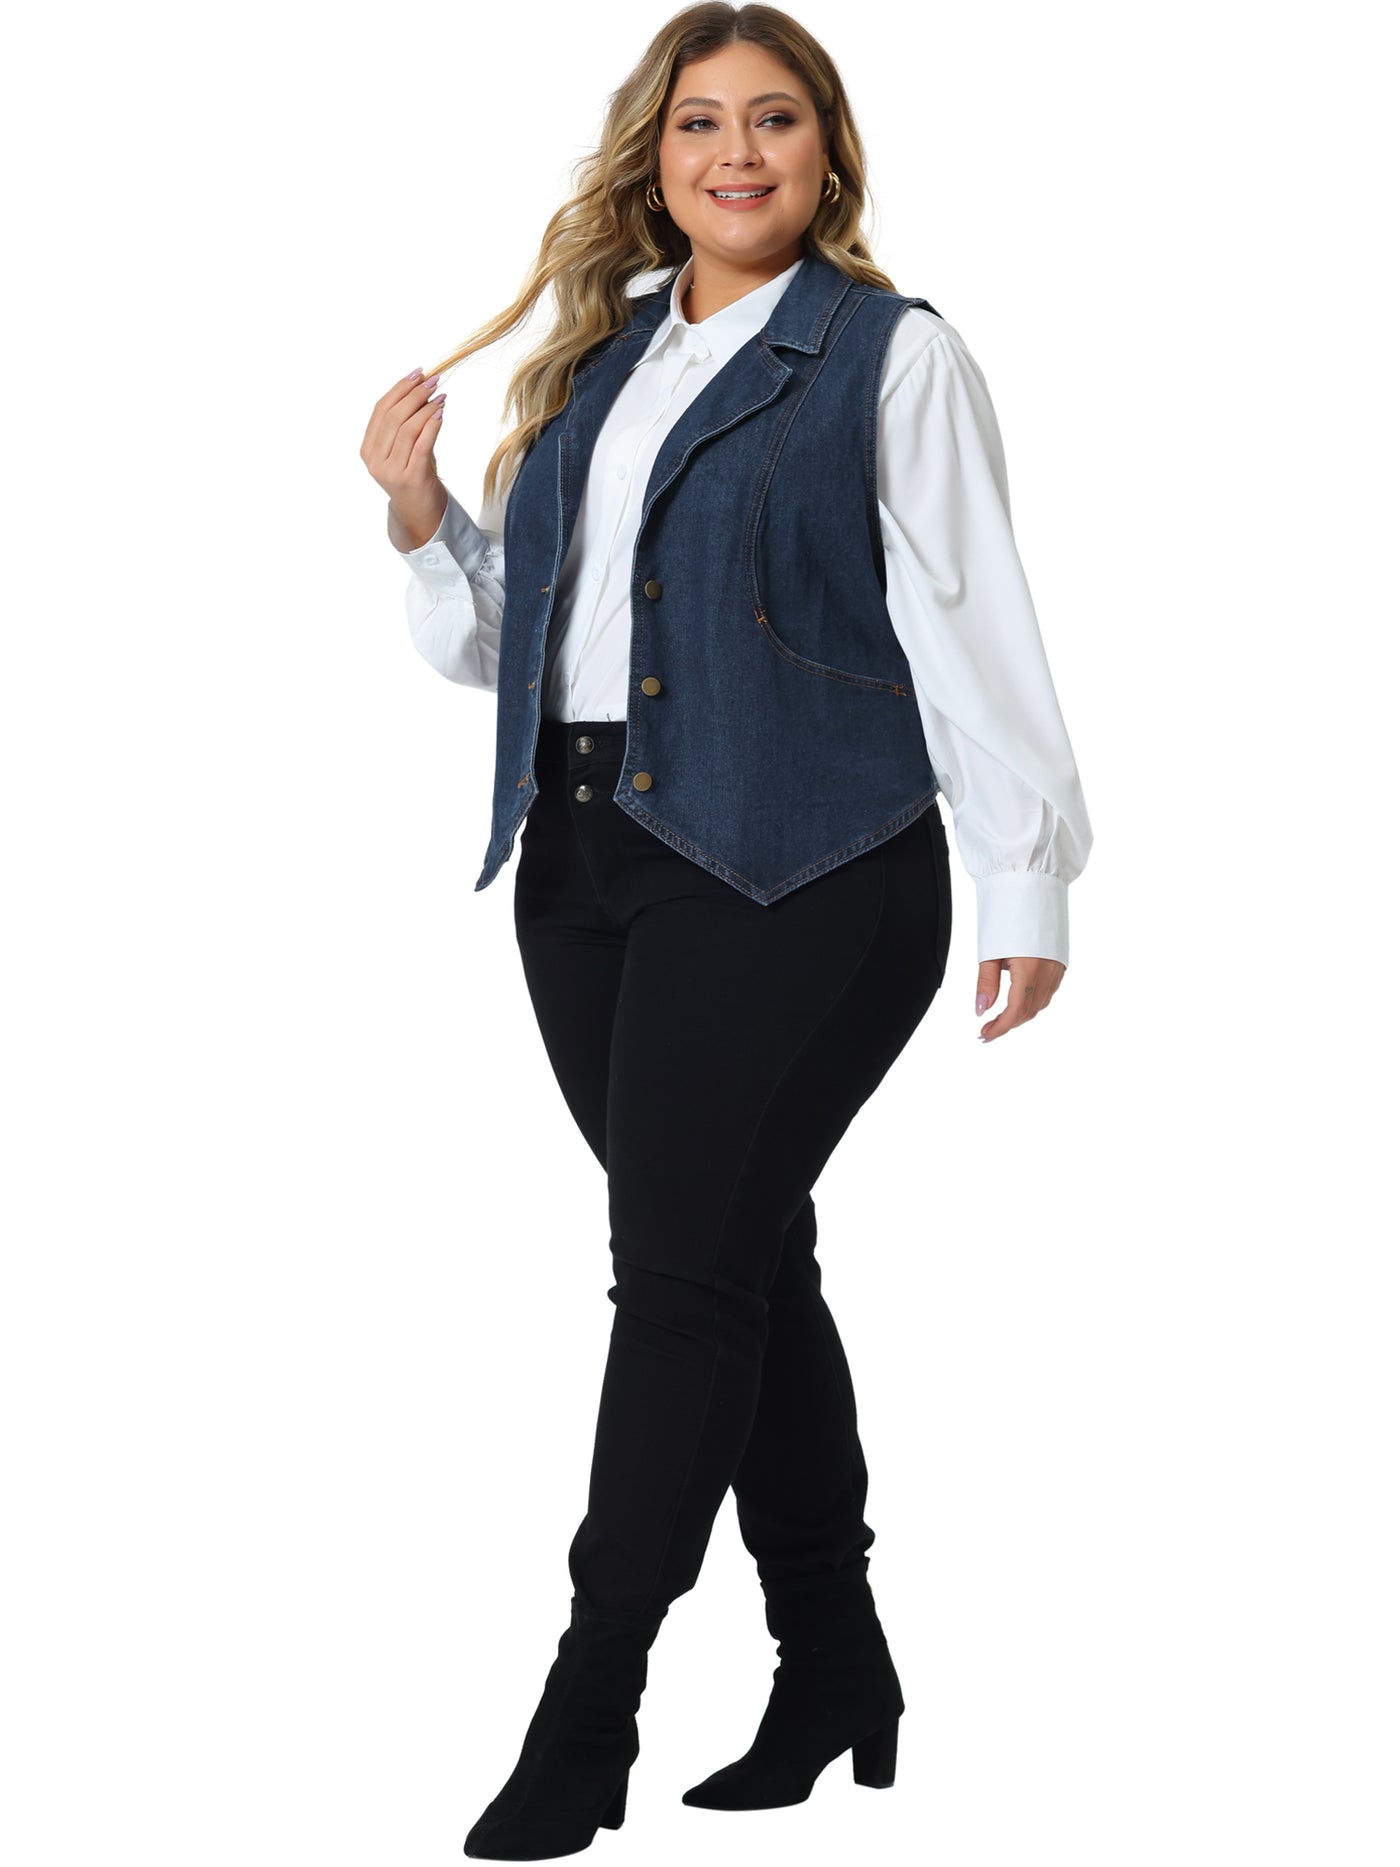 Bublédon Plus Size Denim Vest for Women Sleeveless Lapel Casual Lightweight Buttons Jackets